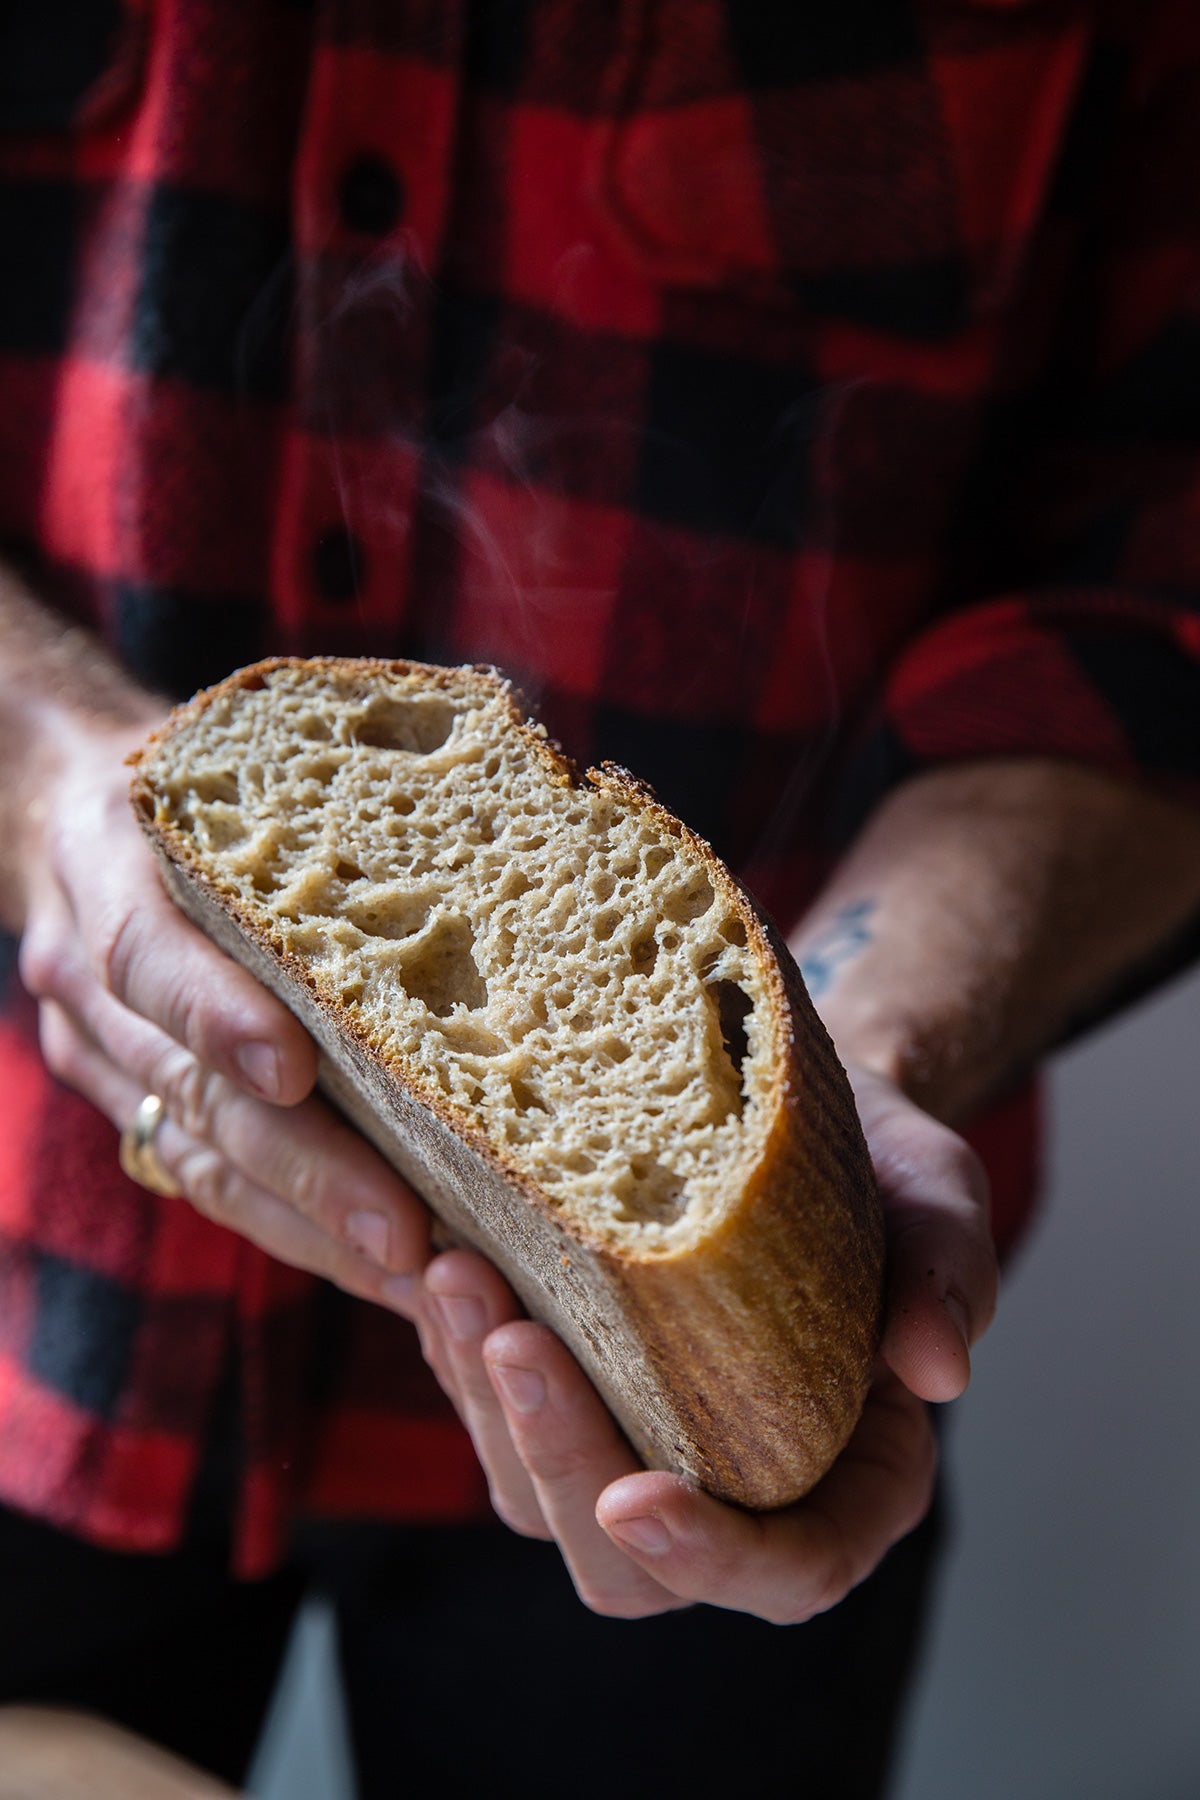 10 Best Bread Baking Supplies 2023 - Tips from Josey Baker